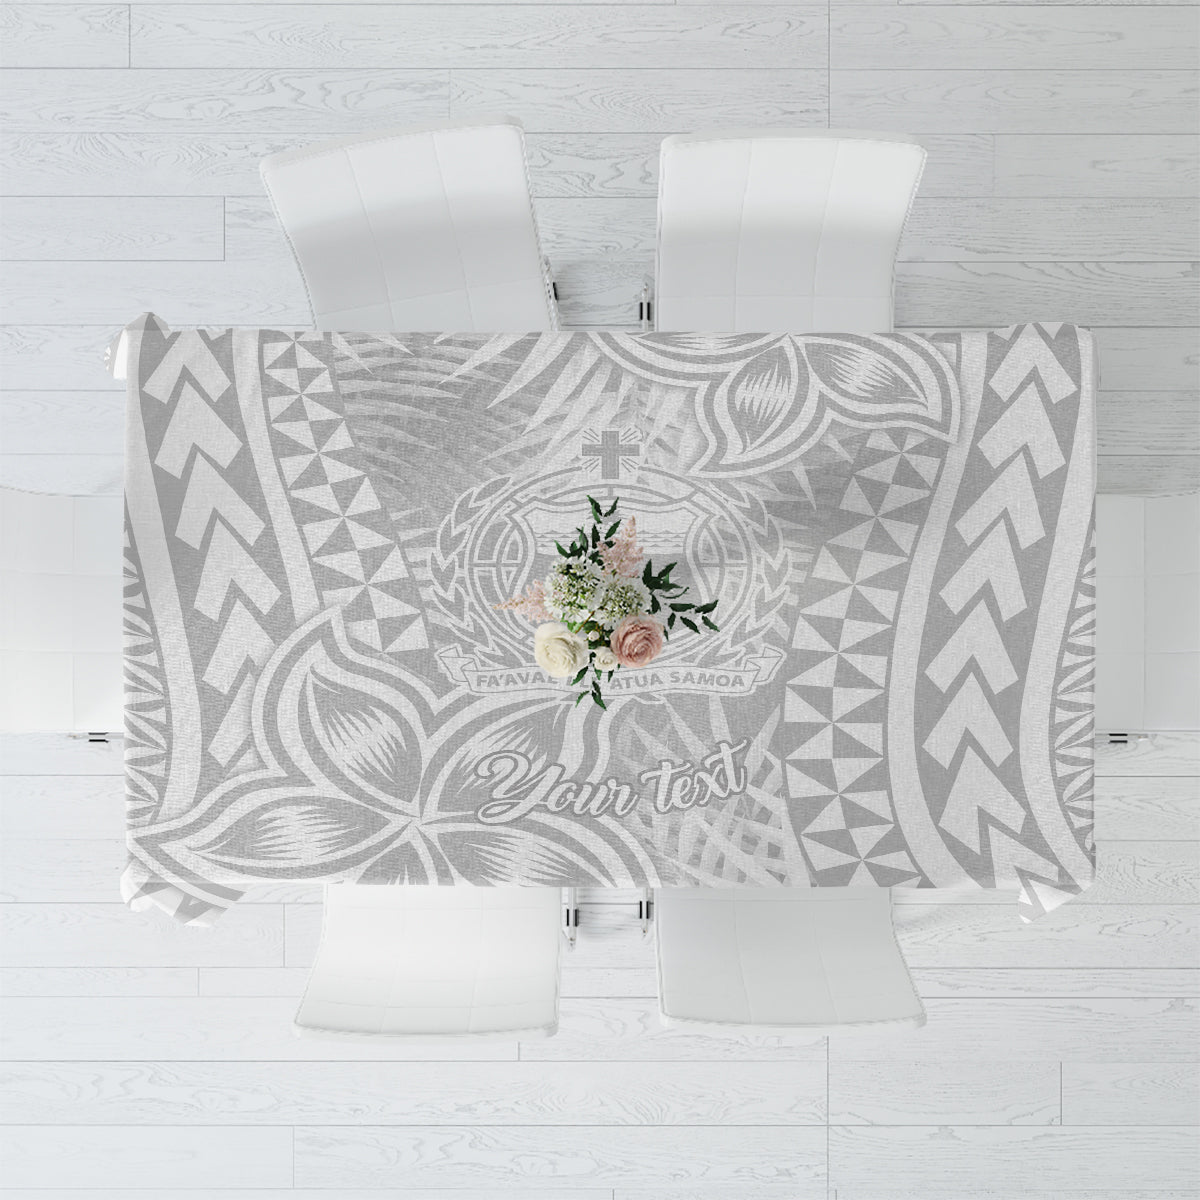 Personalised Samoa Lotu Tamait Tablecloth Tropical Plant White Sunday With Polynesia Pattern LT9 White - Polynesian Pride